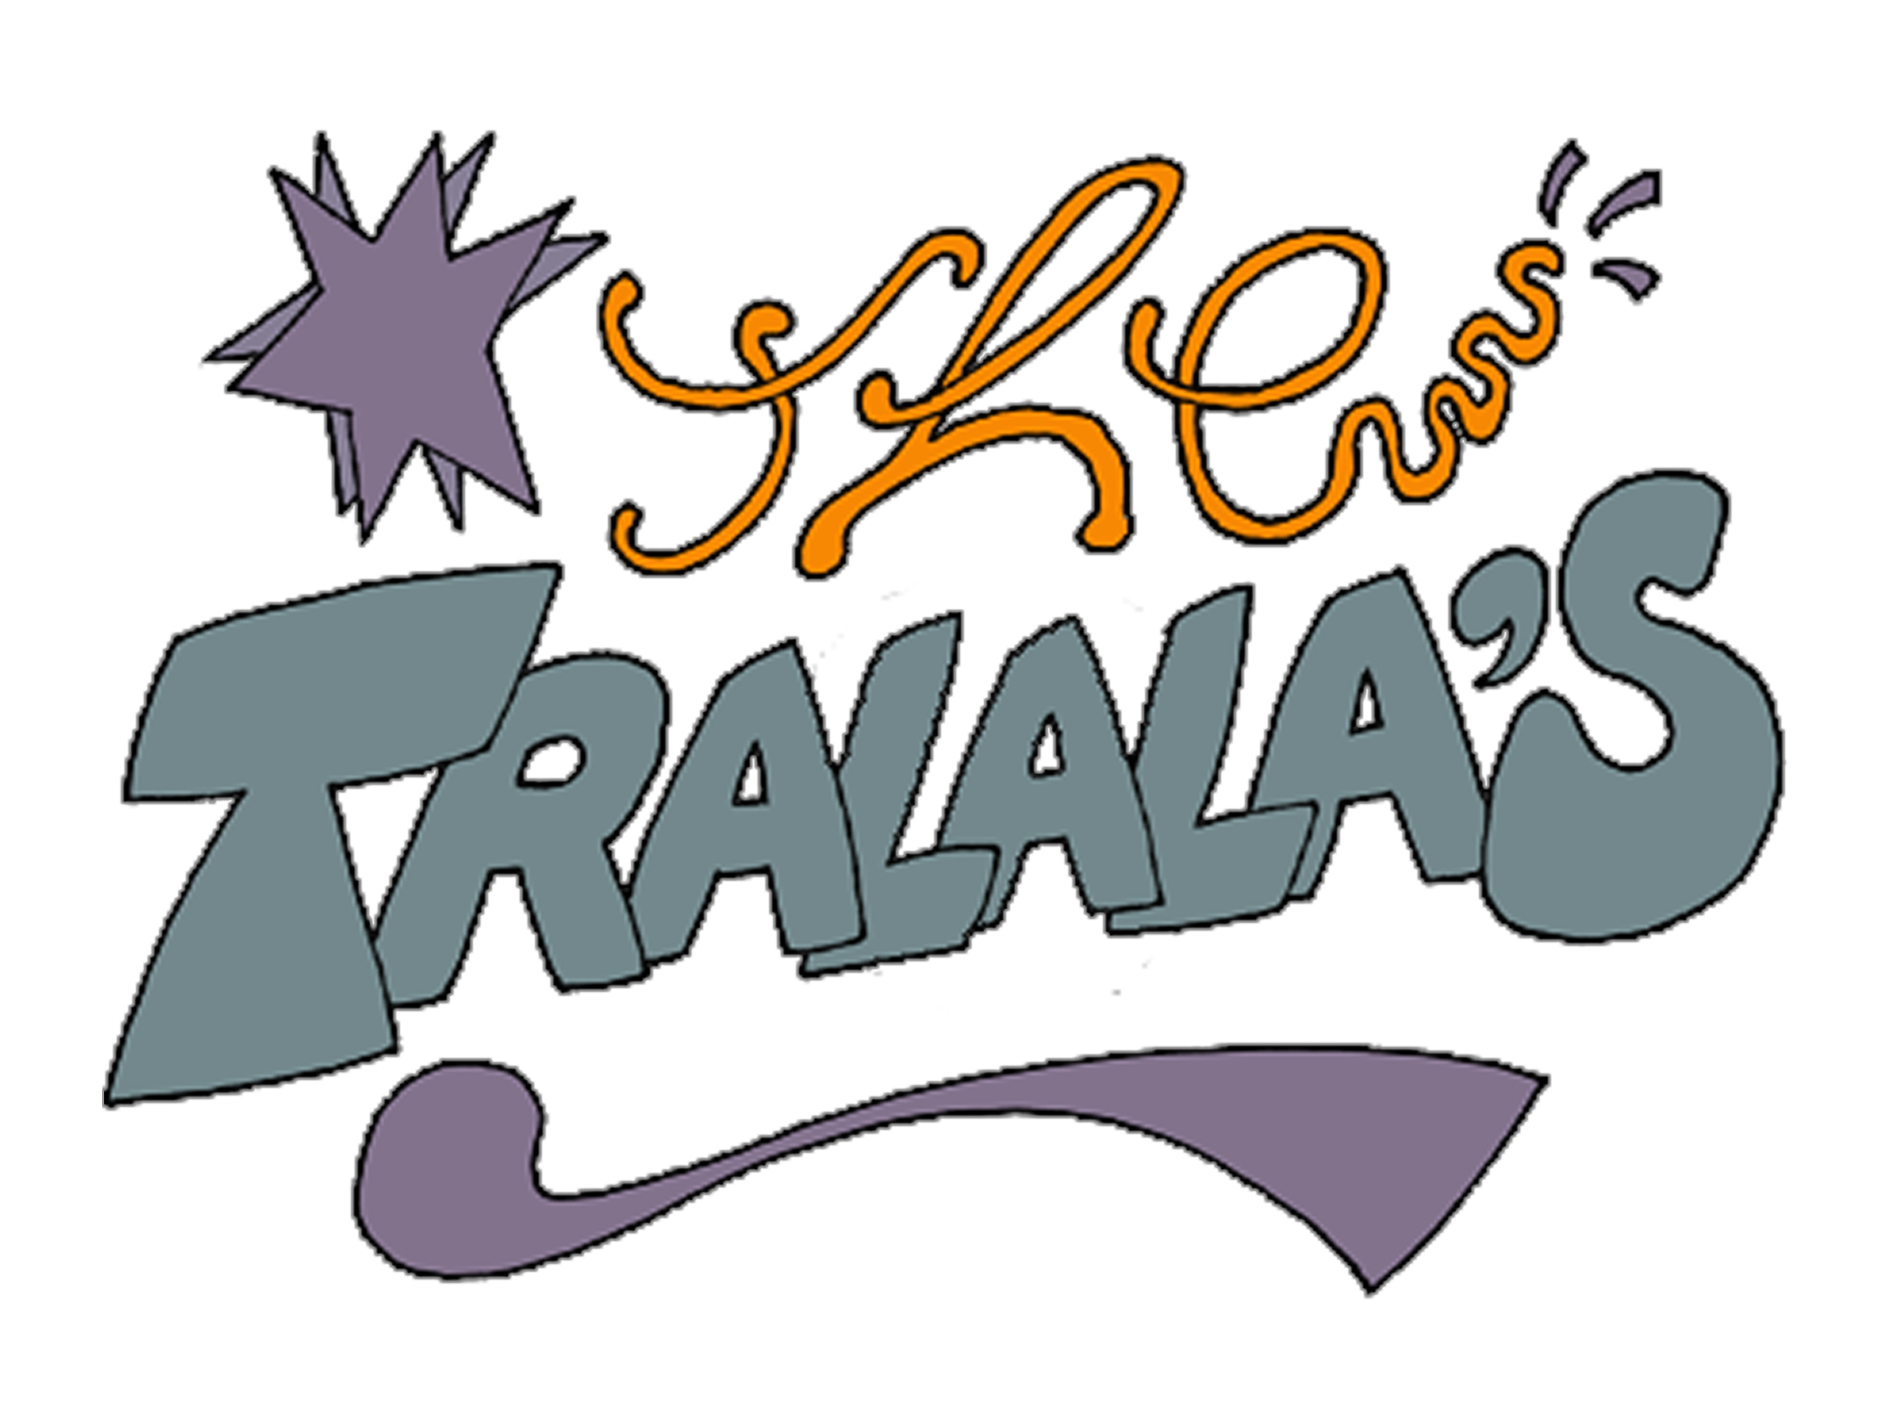 http://indiemusicpeople.com/uploads2/THE_TRALALAS_-_2003_the_tralalas_logo.jpg